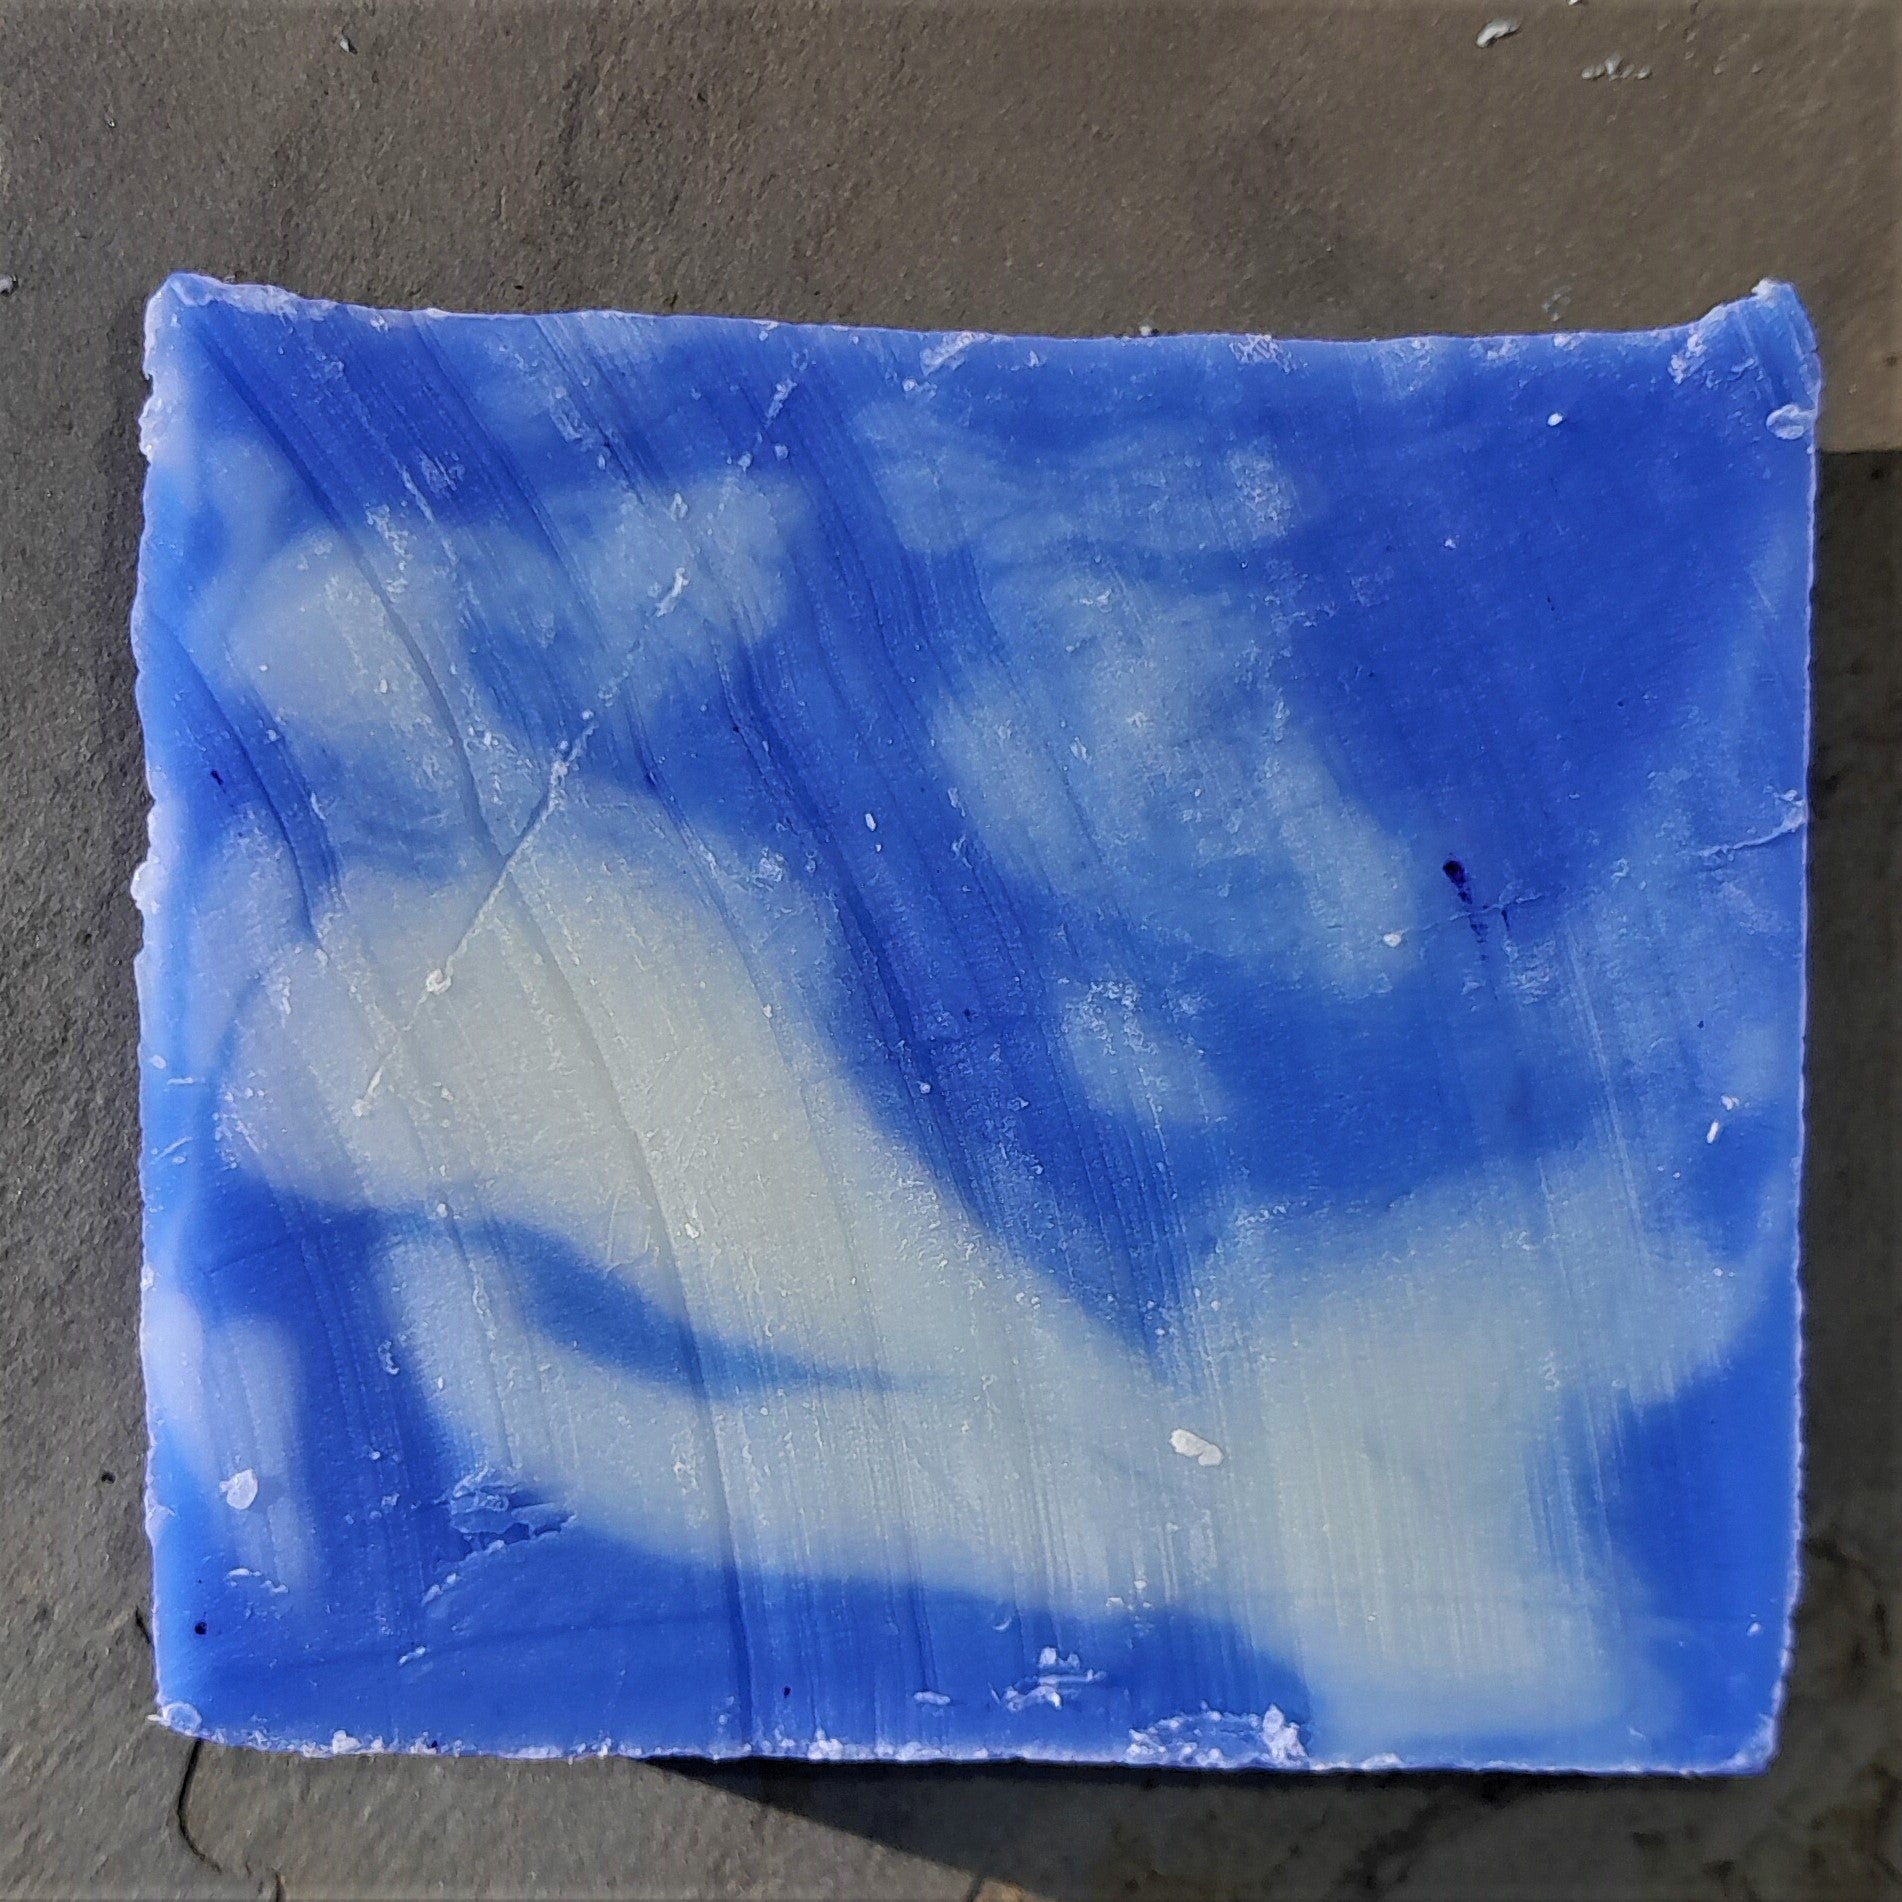 Blue and White Swirl Soap Lavender Moisturising Natural Handmade ecofriendly